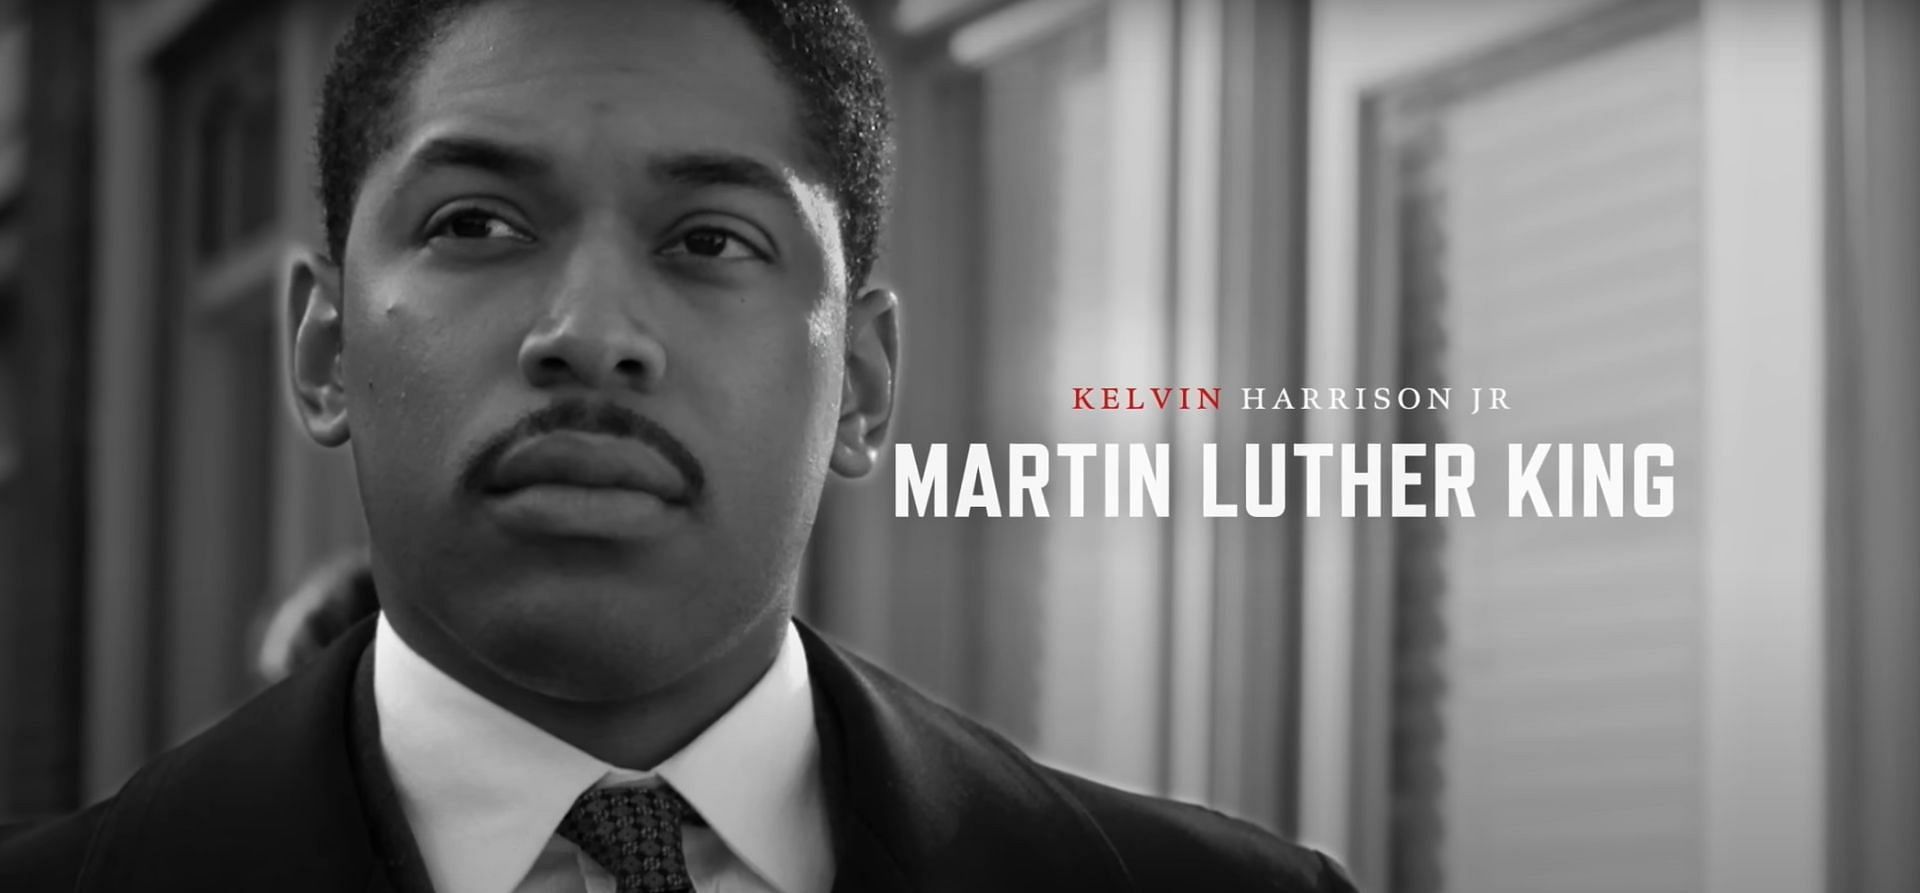 Kelvin Harrison Jr as Martin Luther King Jr. (image via National Geographic, 1:37)